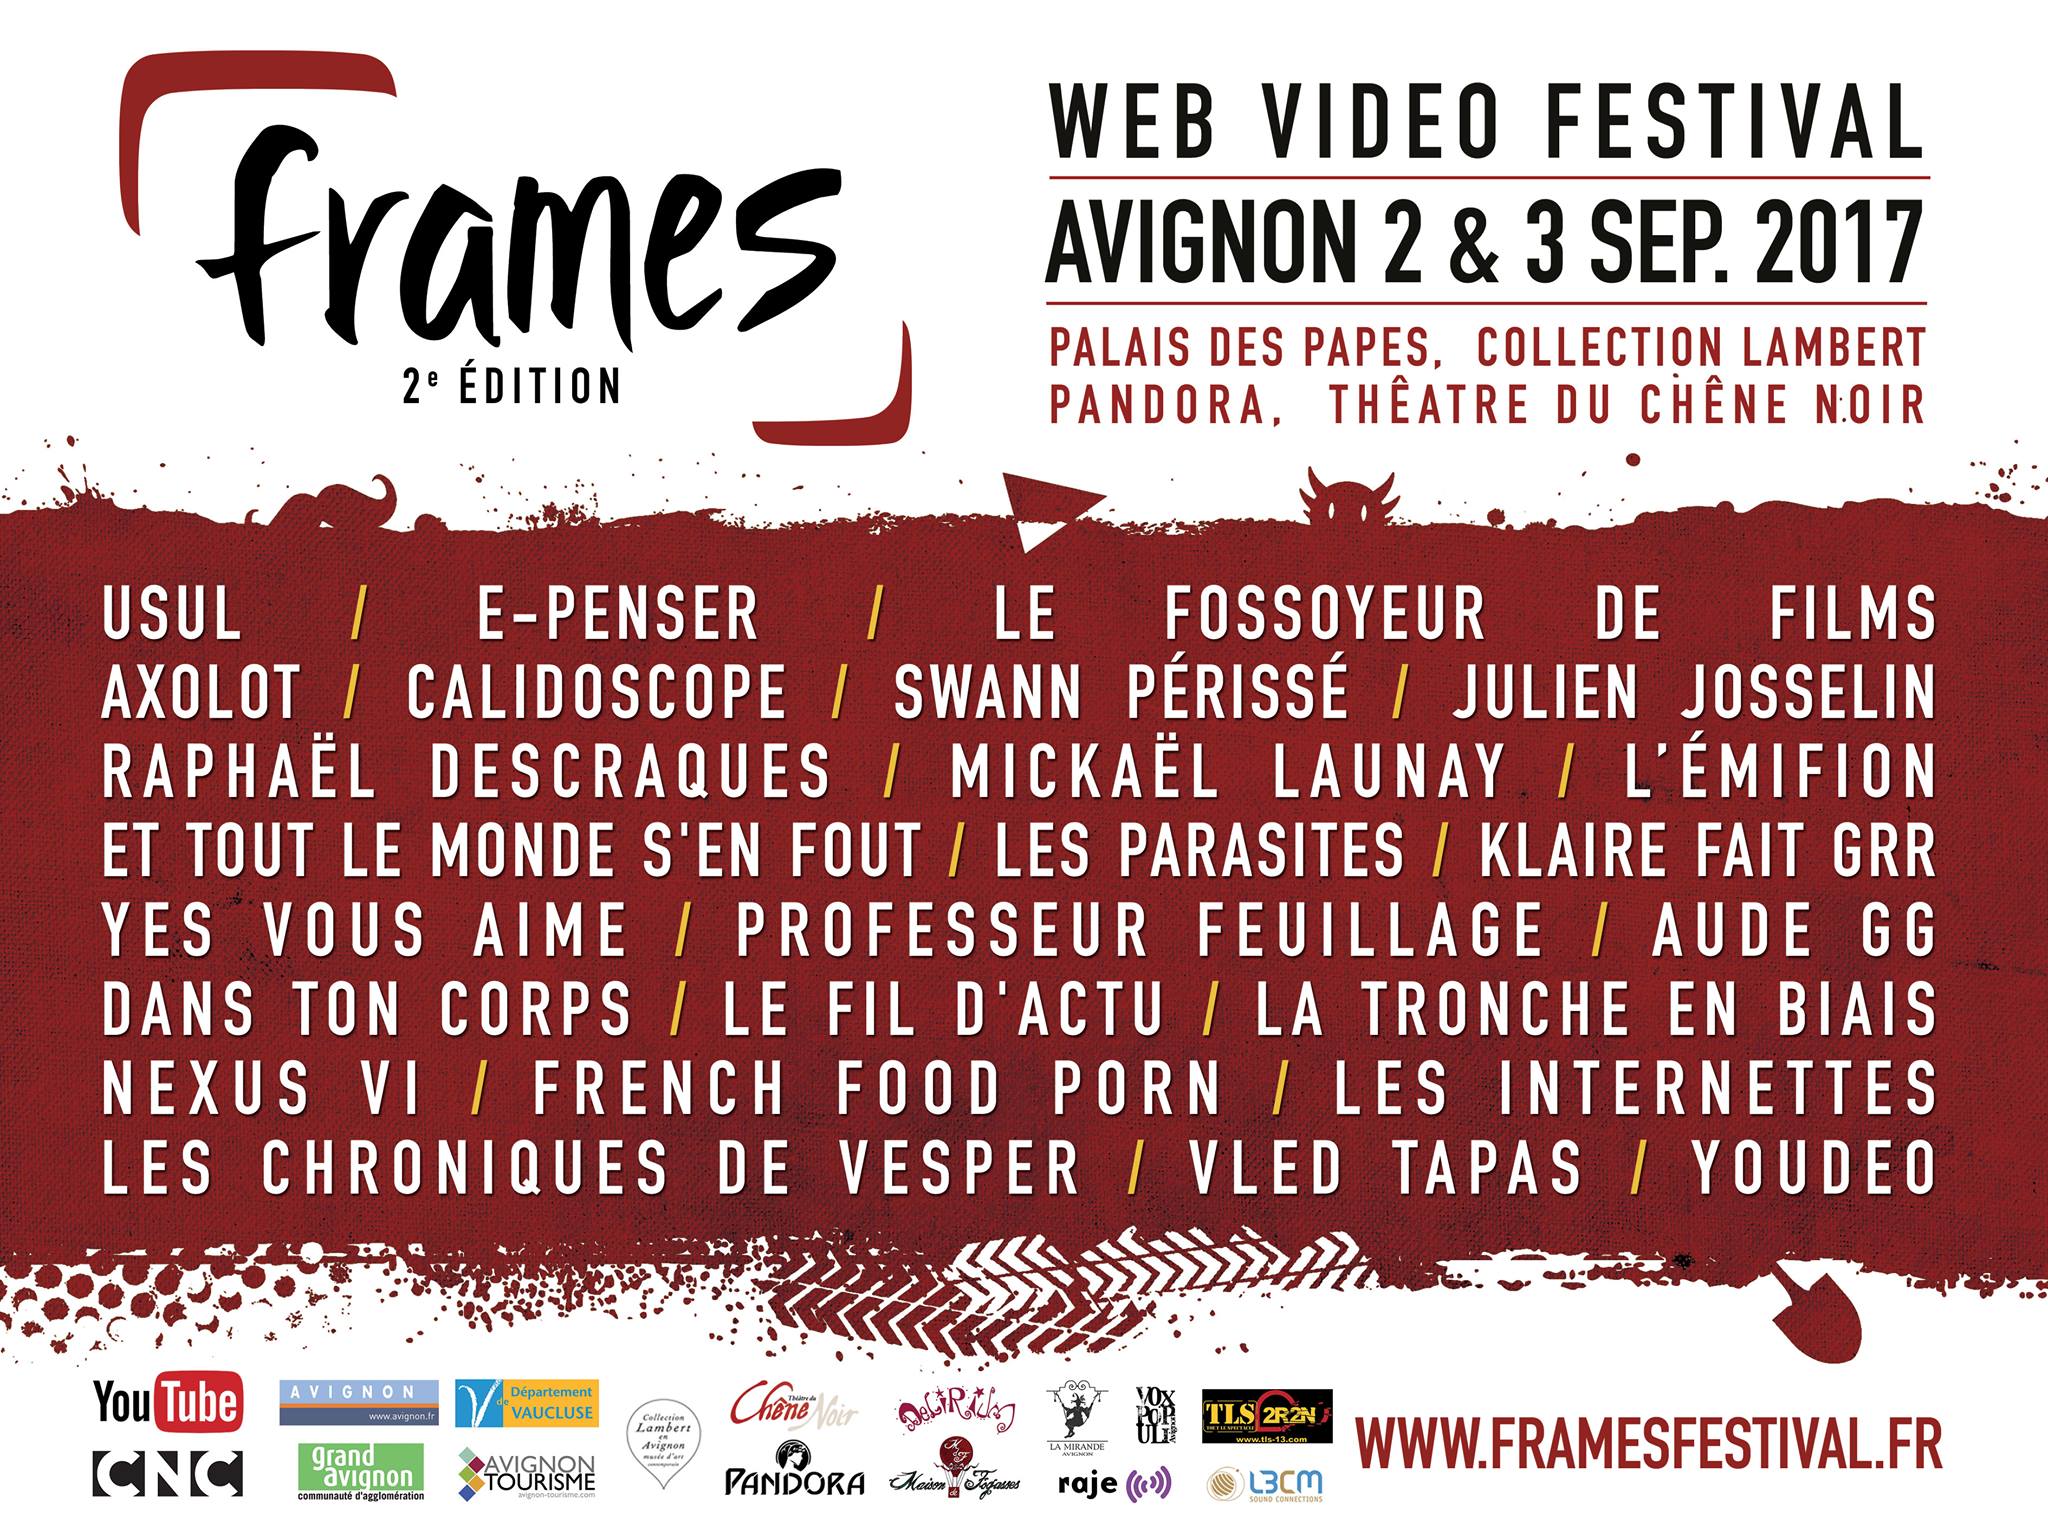 Frames festival : photo du programme officielle du Frames festival 2017 à Avignon